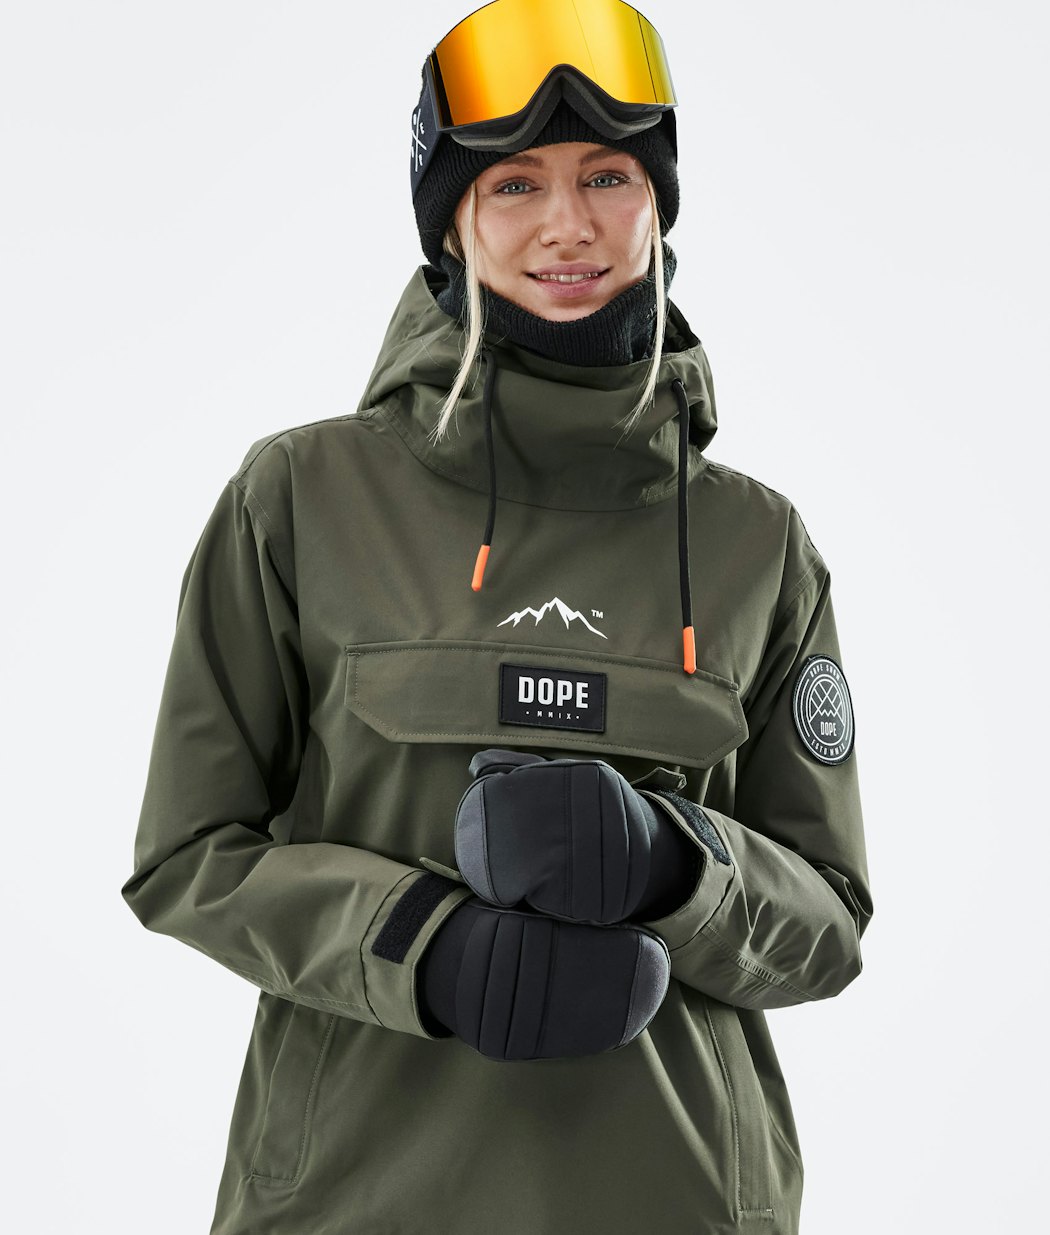 Blizzard W 2021 Ski Jacket Women Olive Green